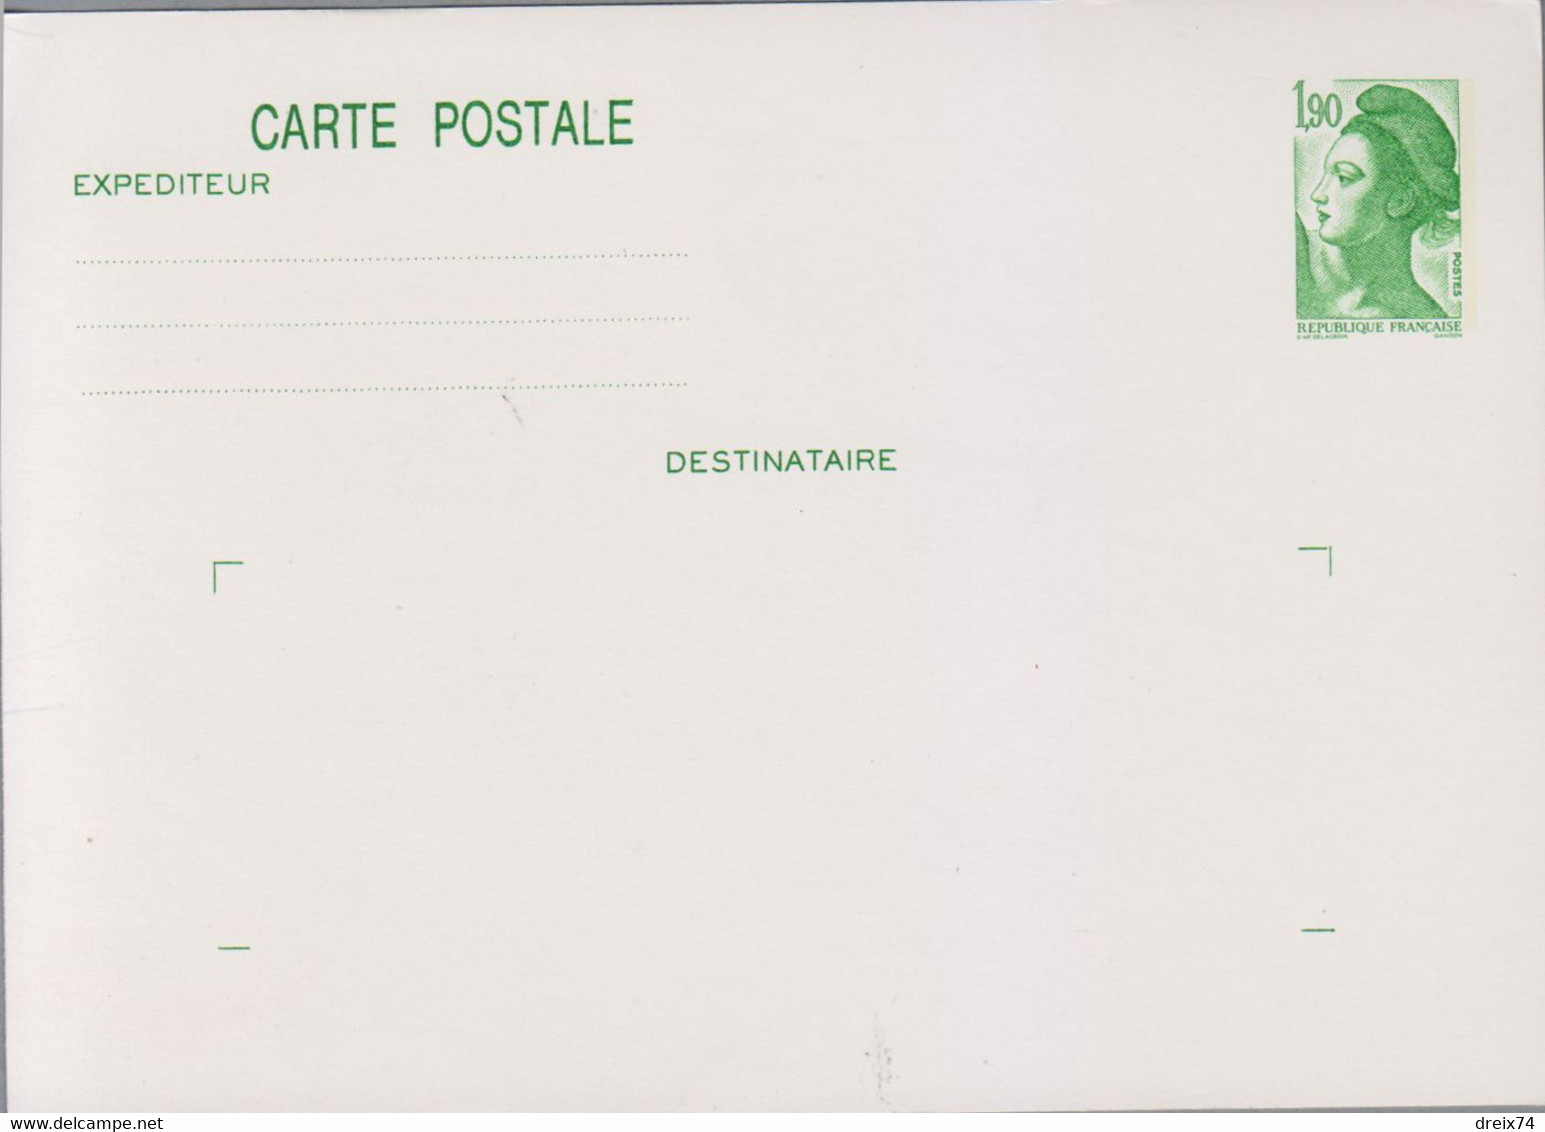 ❄️FRANCE Carte Postale Prêt-à-poster - NEUF 2424 CPI - Konvolute: Ganzsachen & PAP